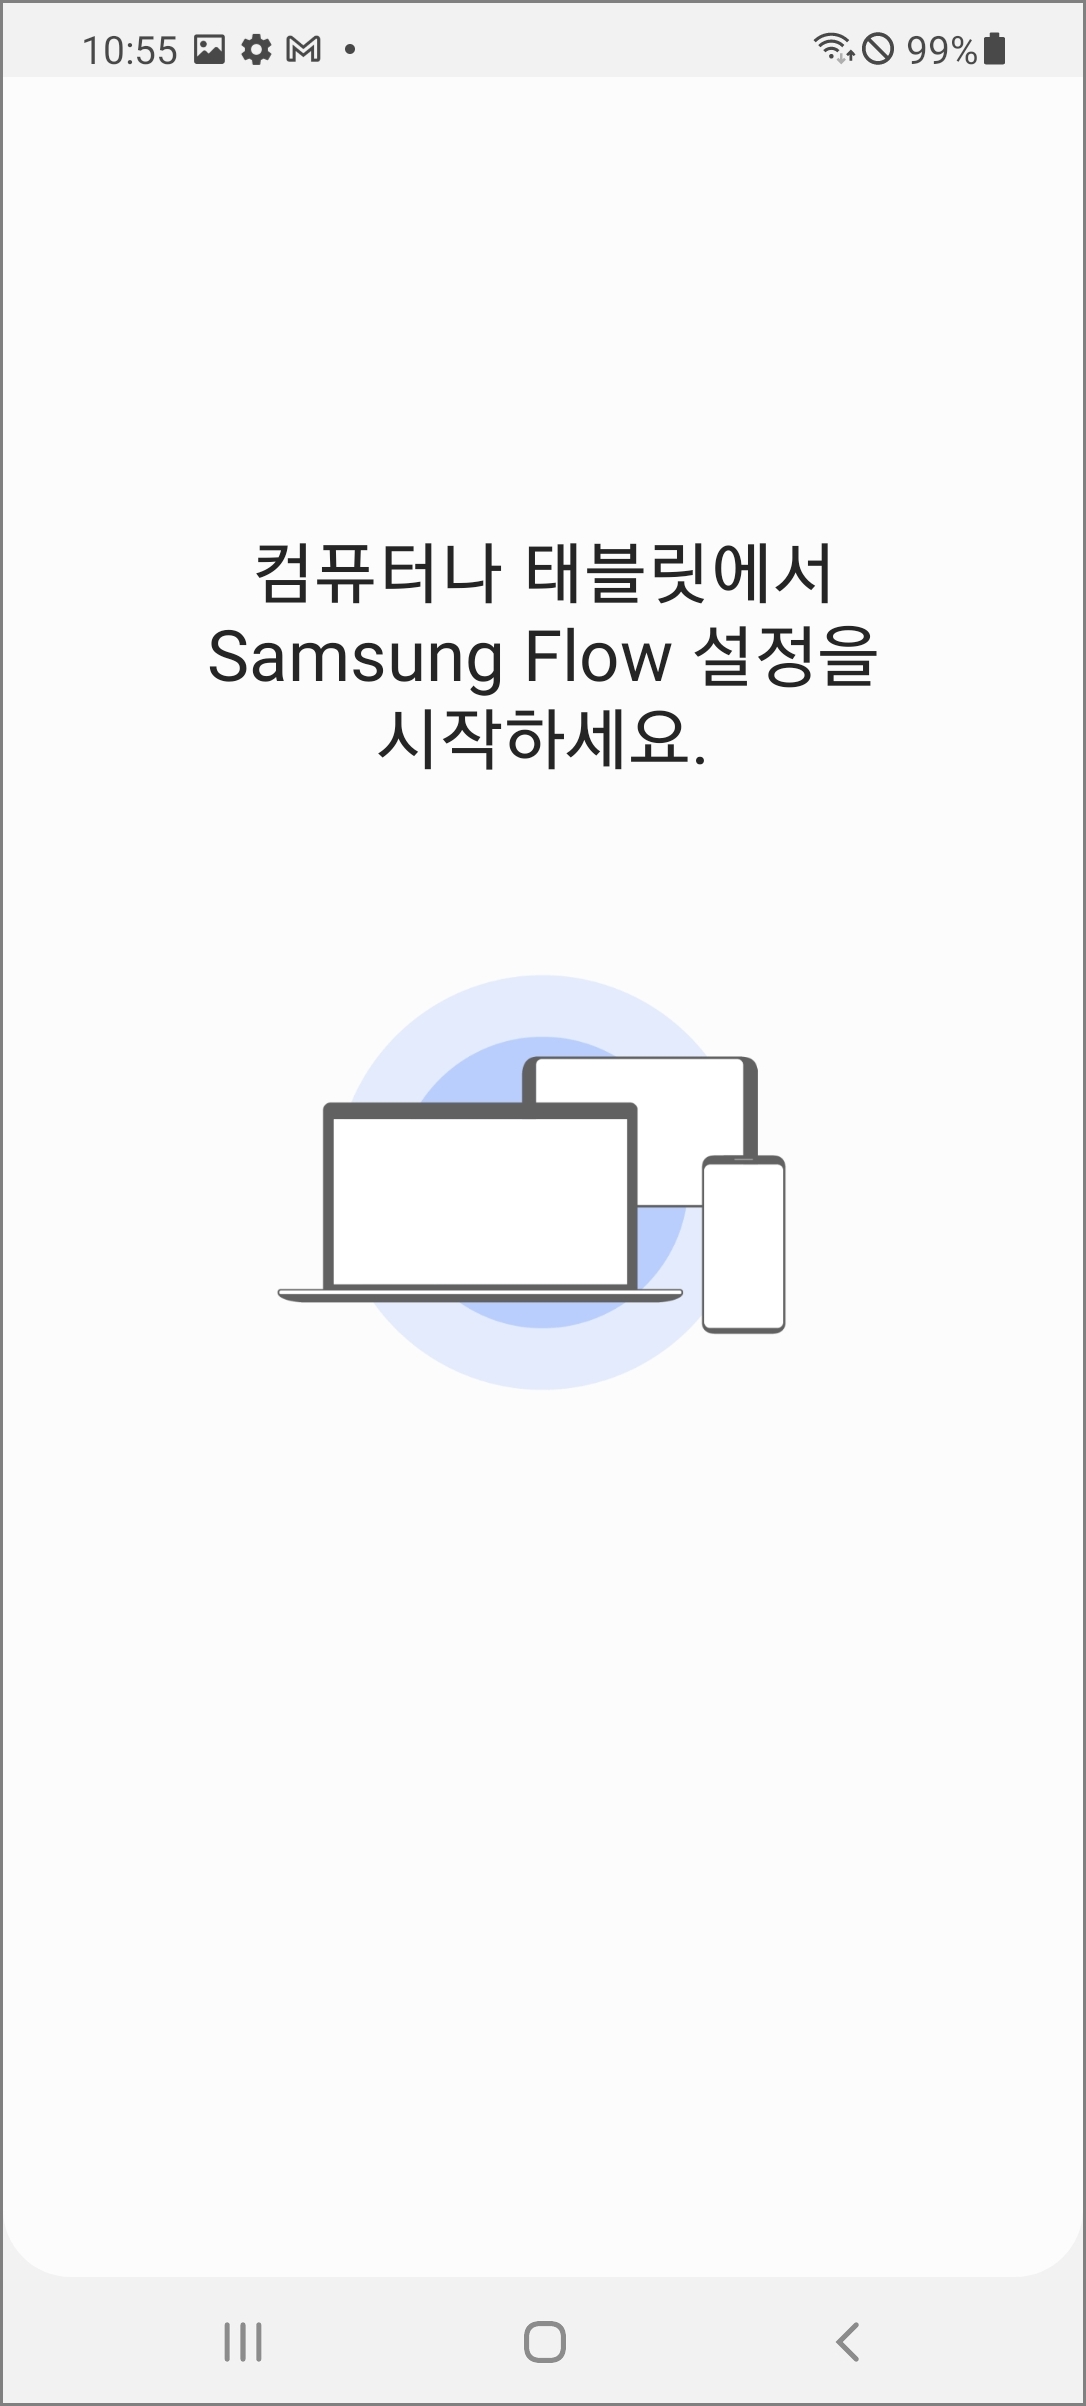 Samsung Flow 모바일 초기화면